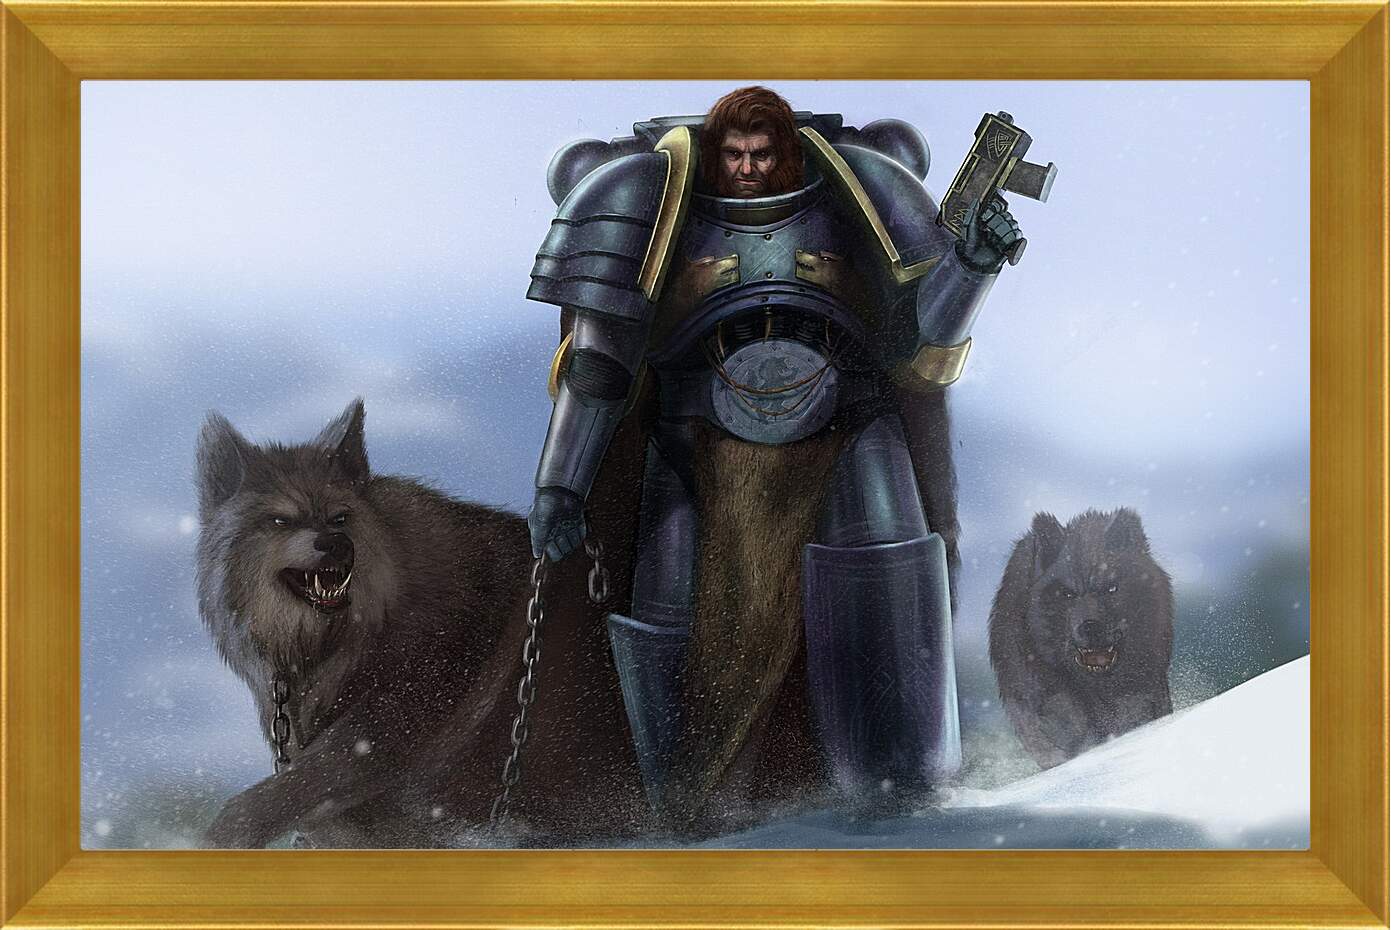 Картина в раме - Warhammer 40K
